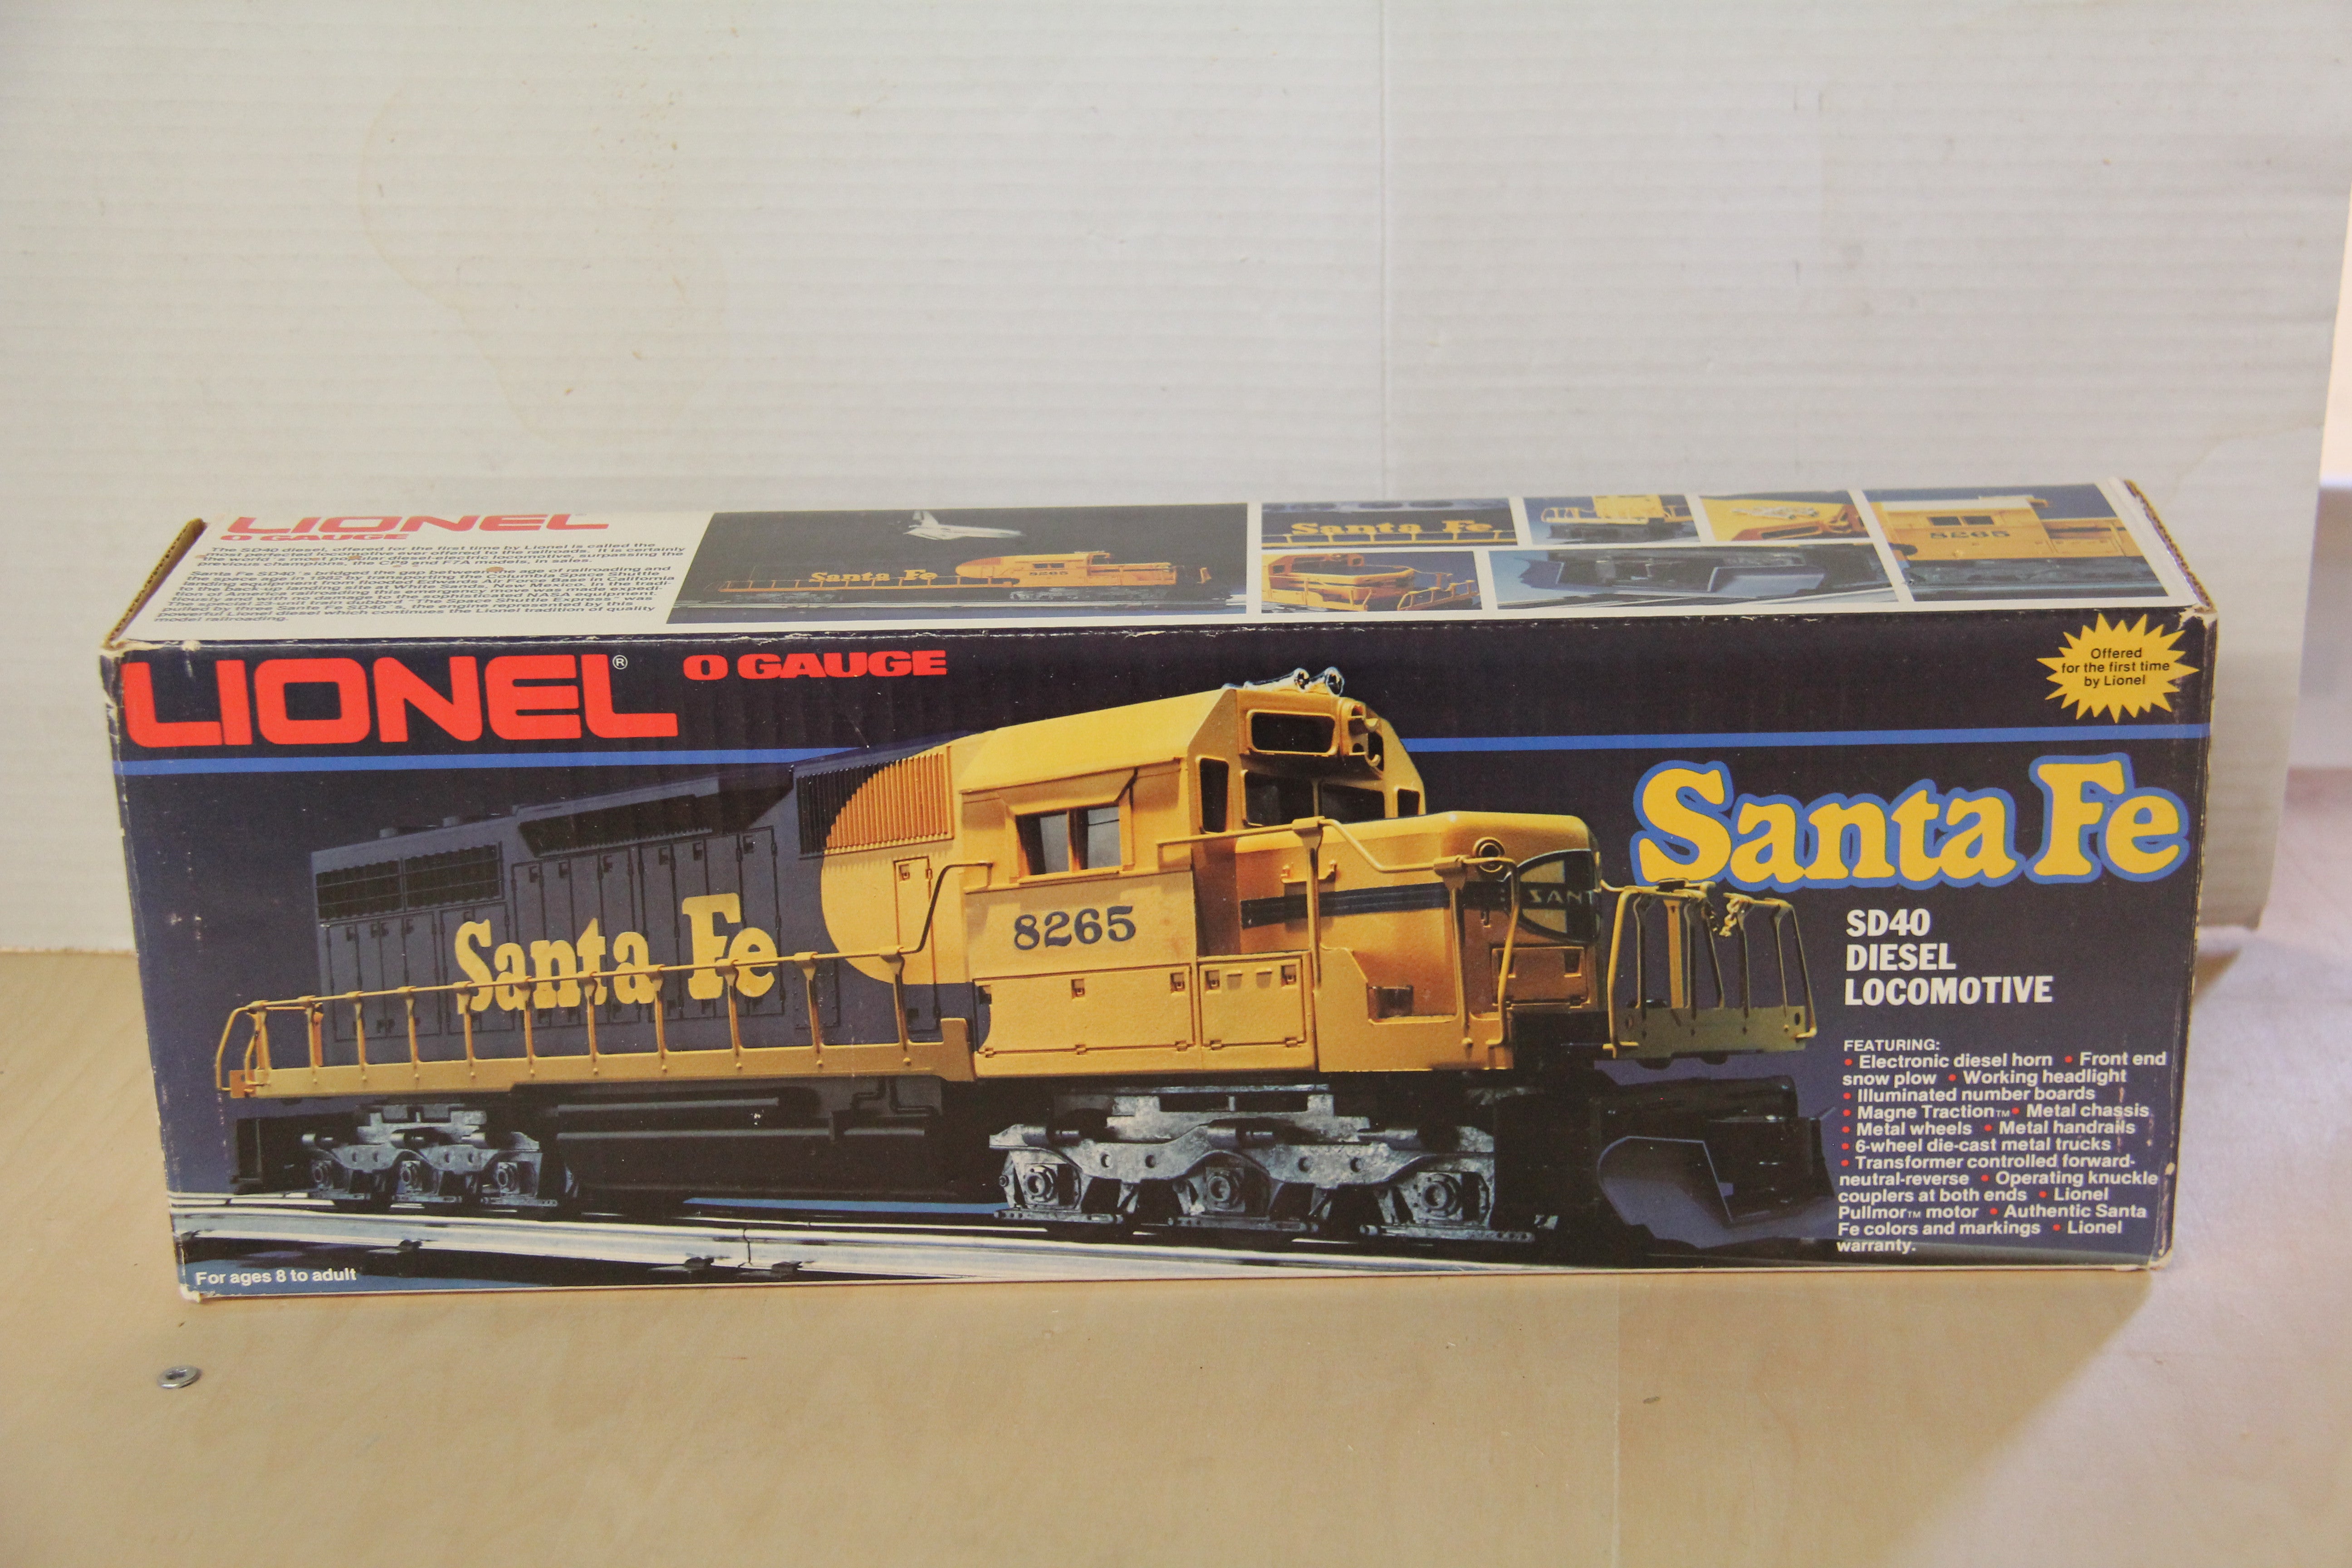 Lionel 6-8265 Santa Fe SD40 Diesel Locomotive-Second hand-M4448